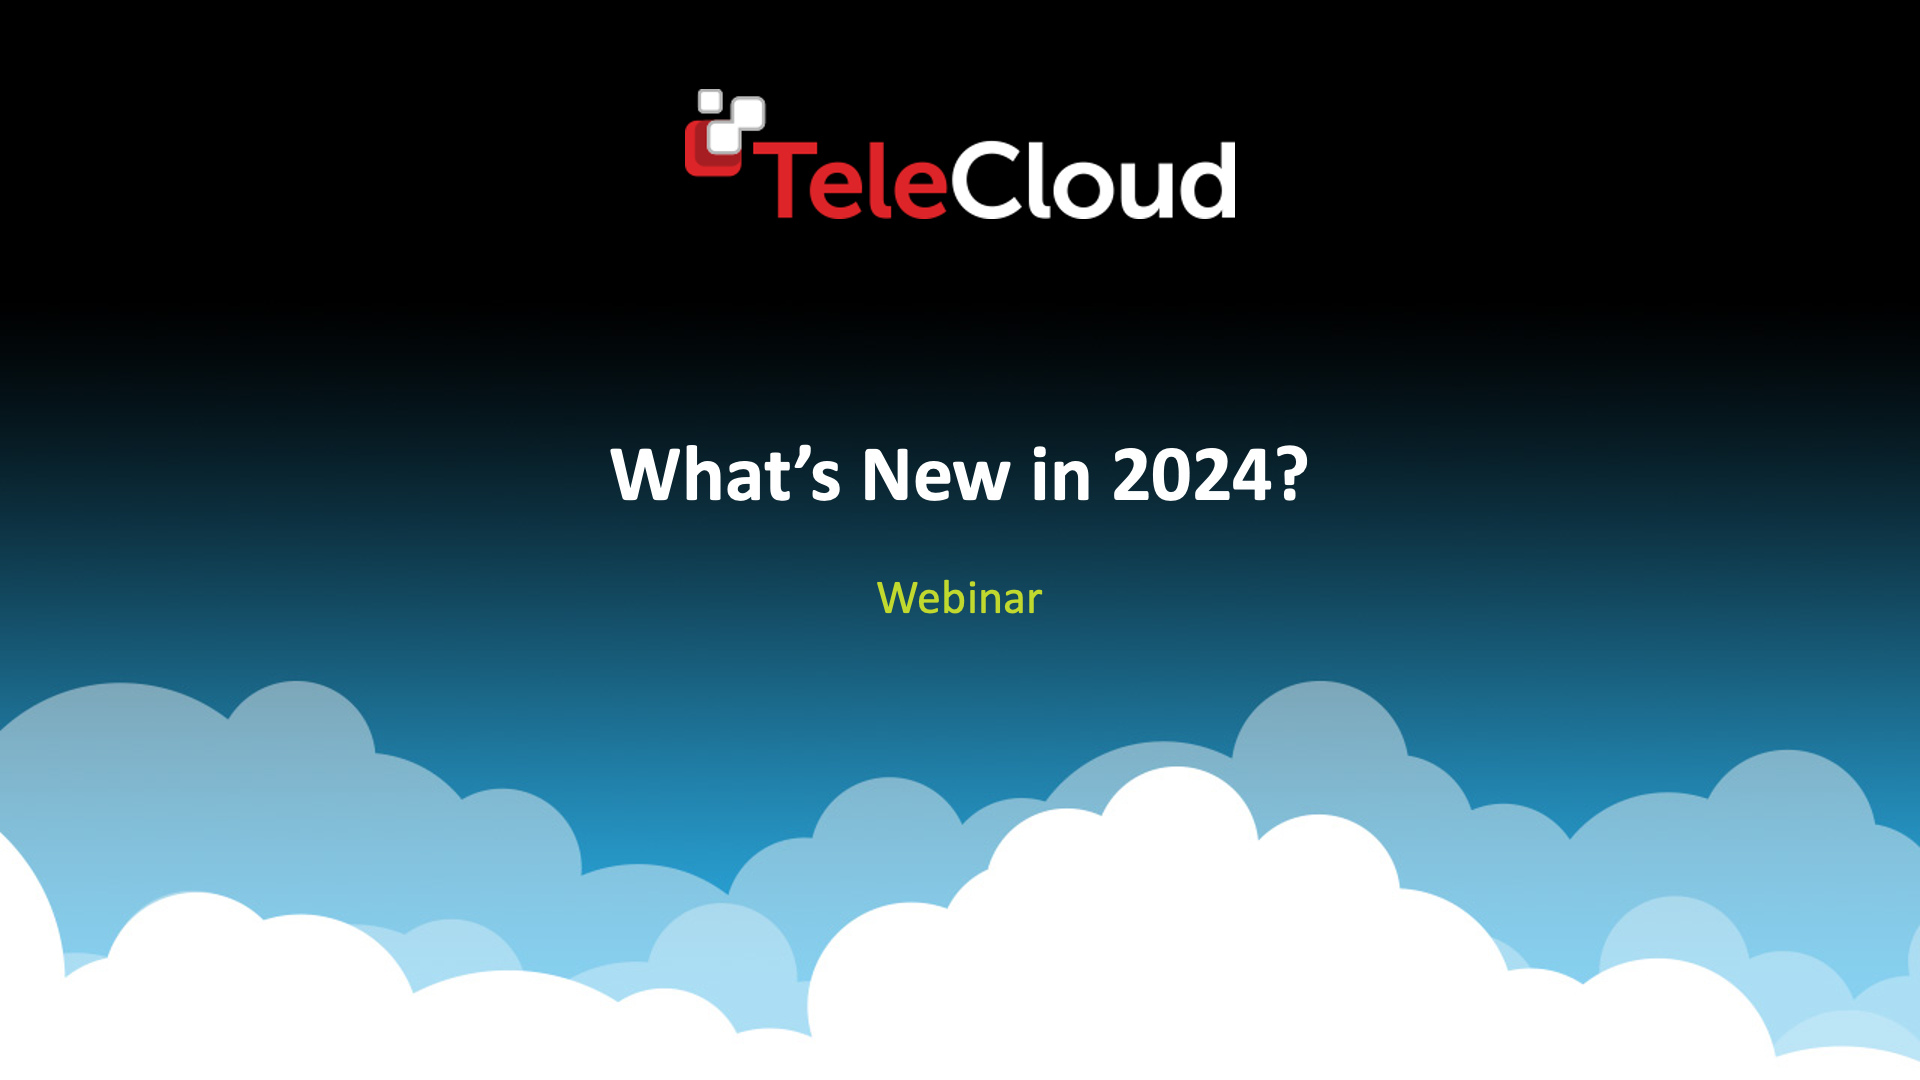 Whats New in 2024 Webinar - TeleCloud (1)